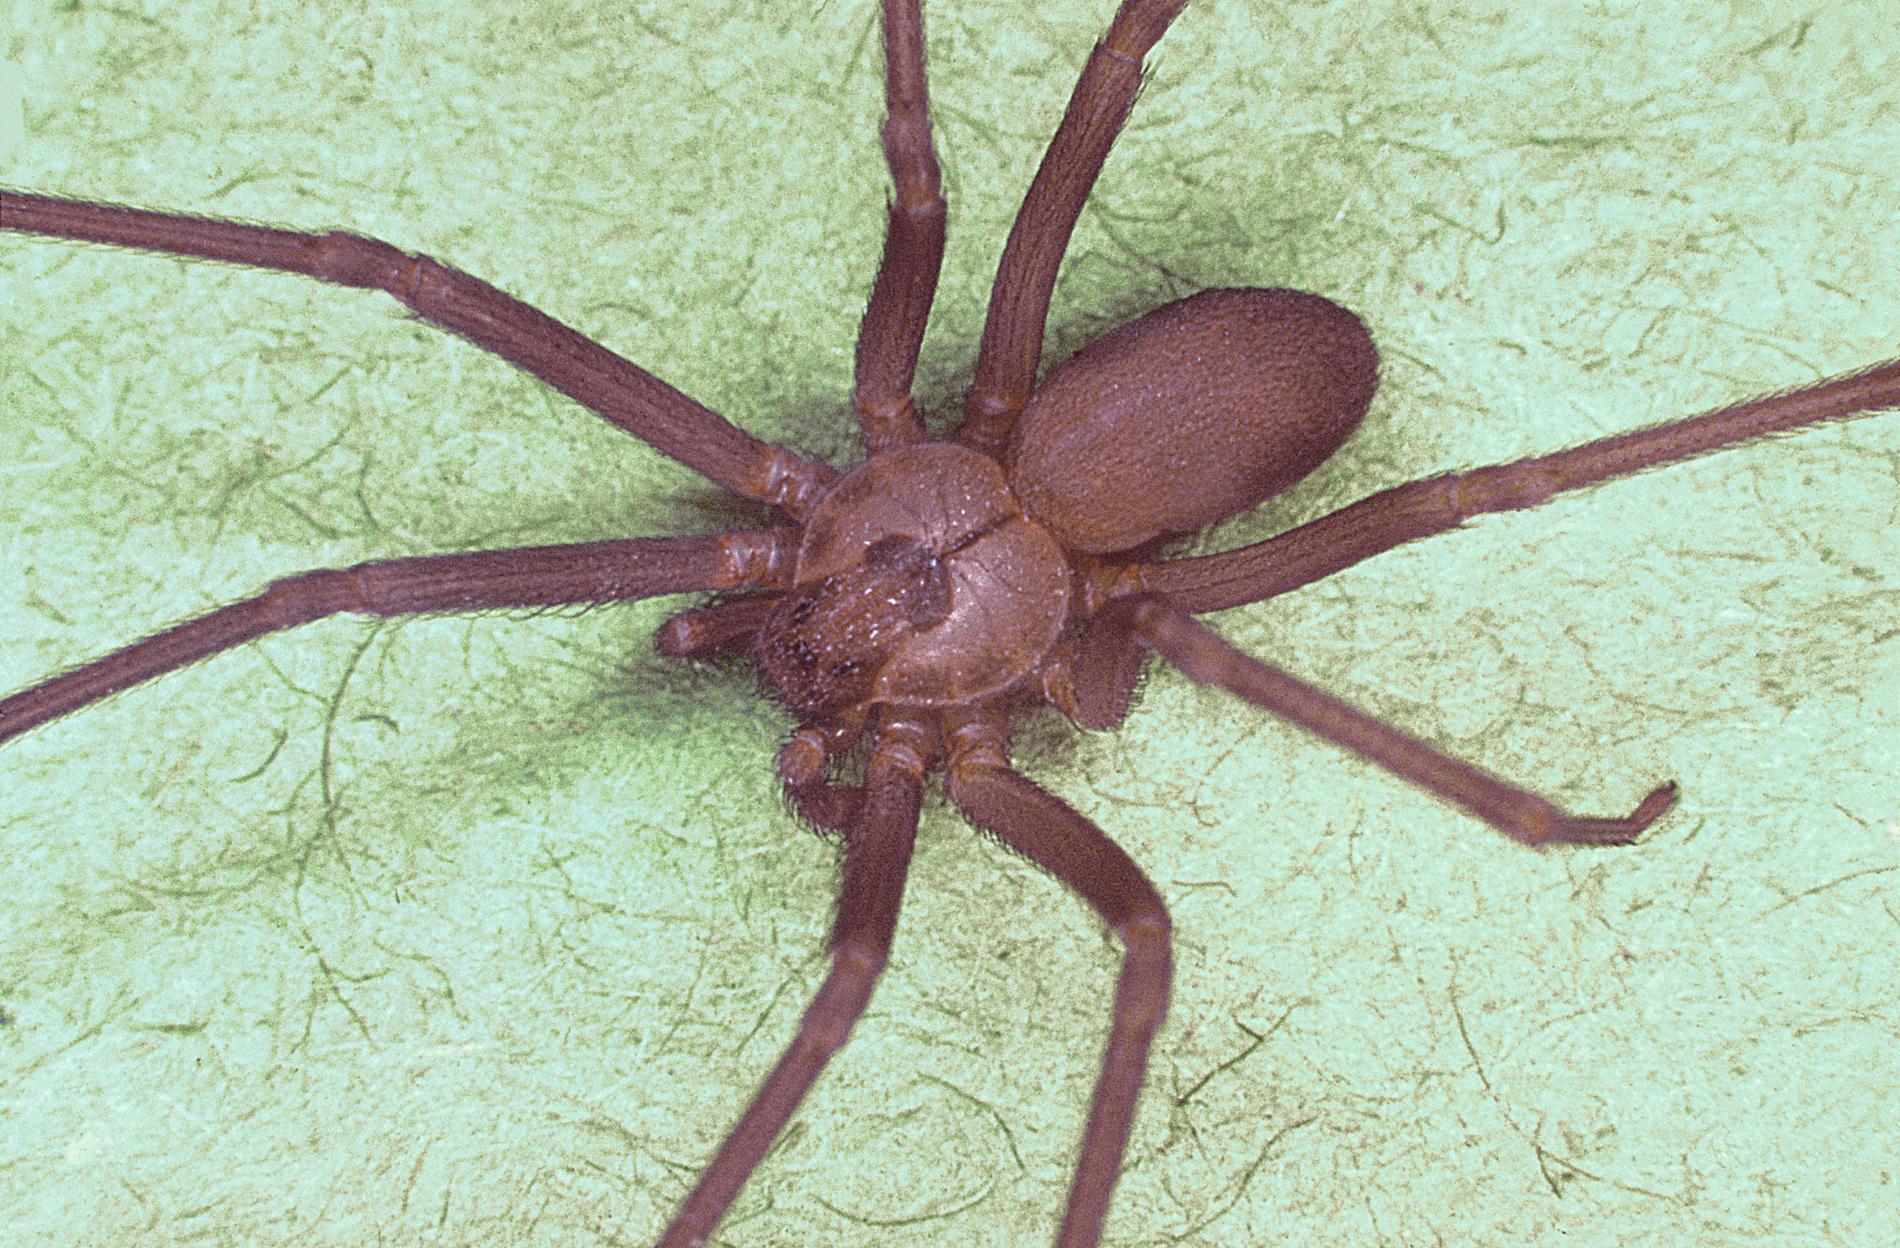 En spindel av typen Loxosceles laeta.